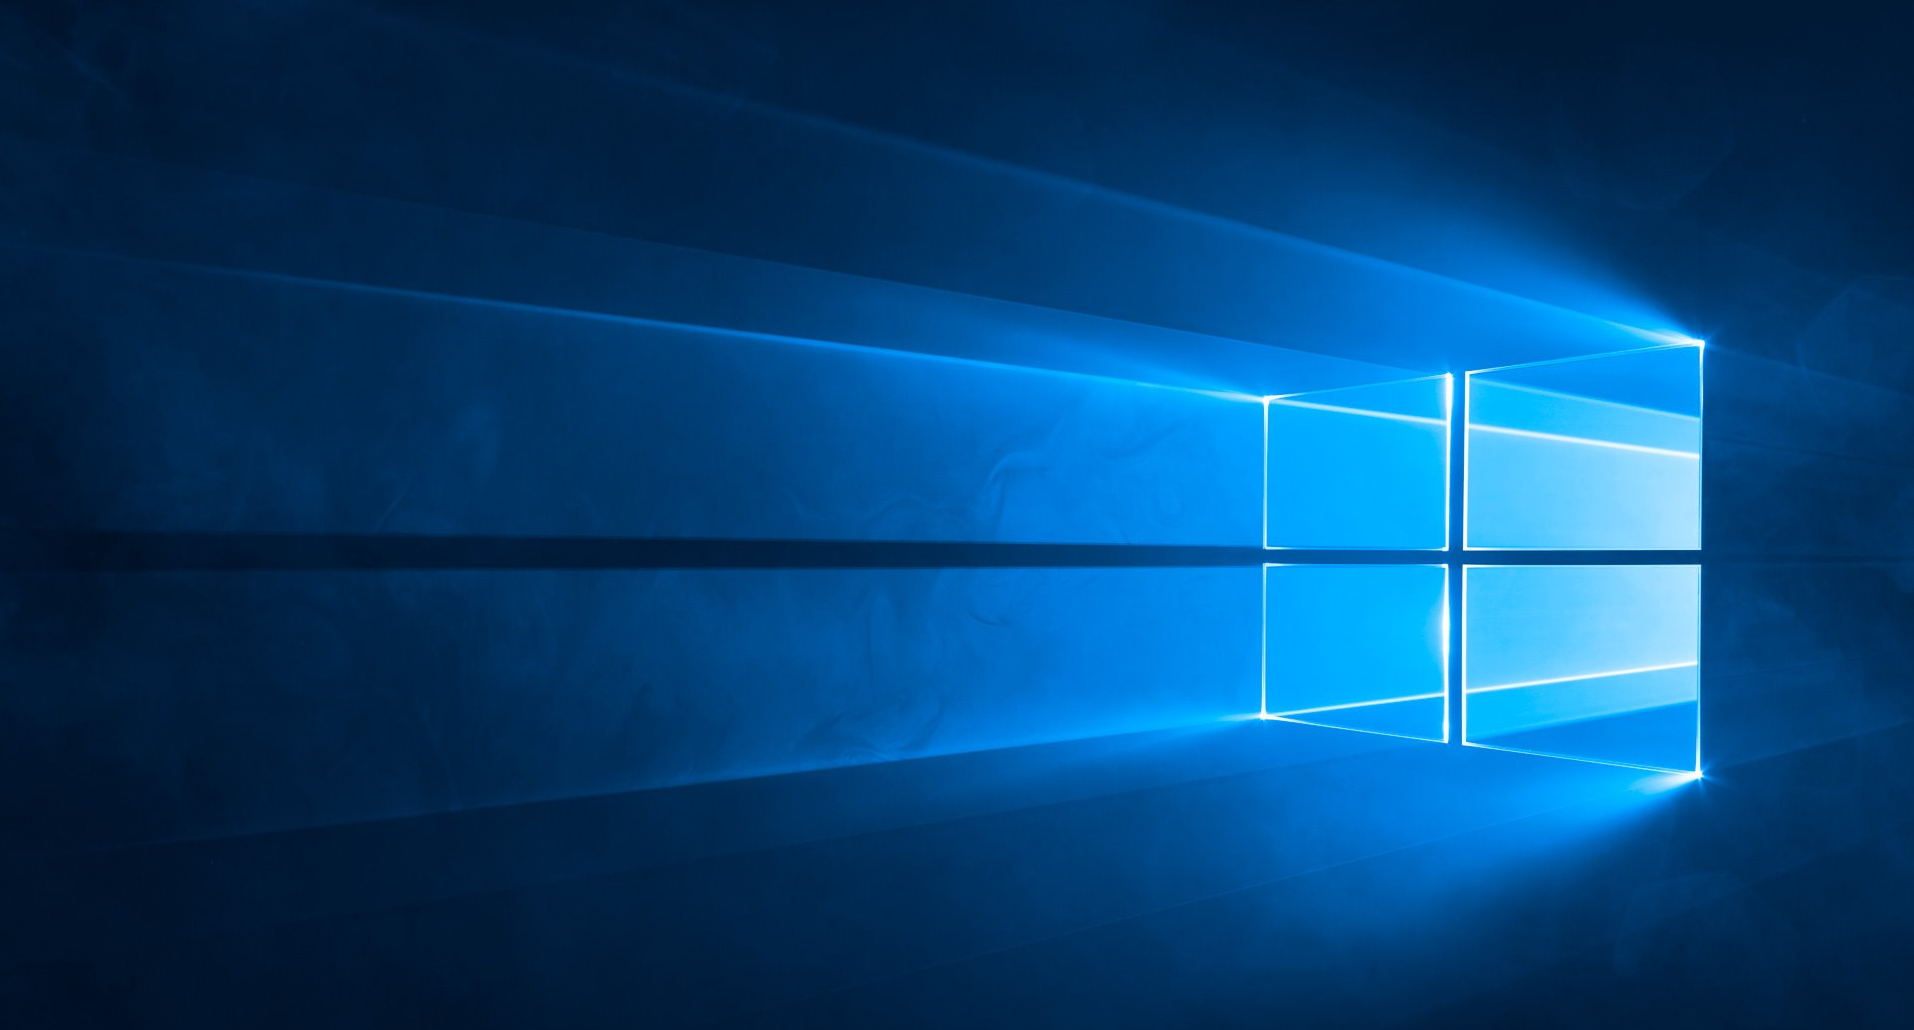 La mise à jour concerne les versions Windows 10 May 2019 Update et Windows 10 November 2019. (Illustration)